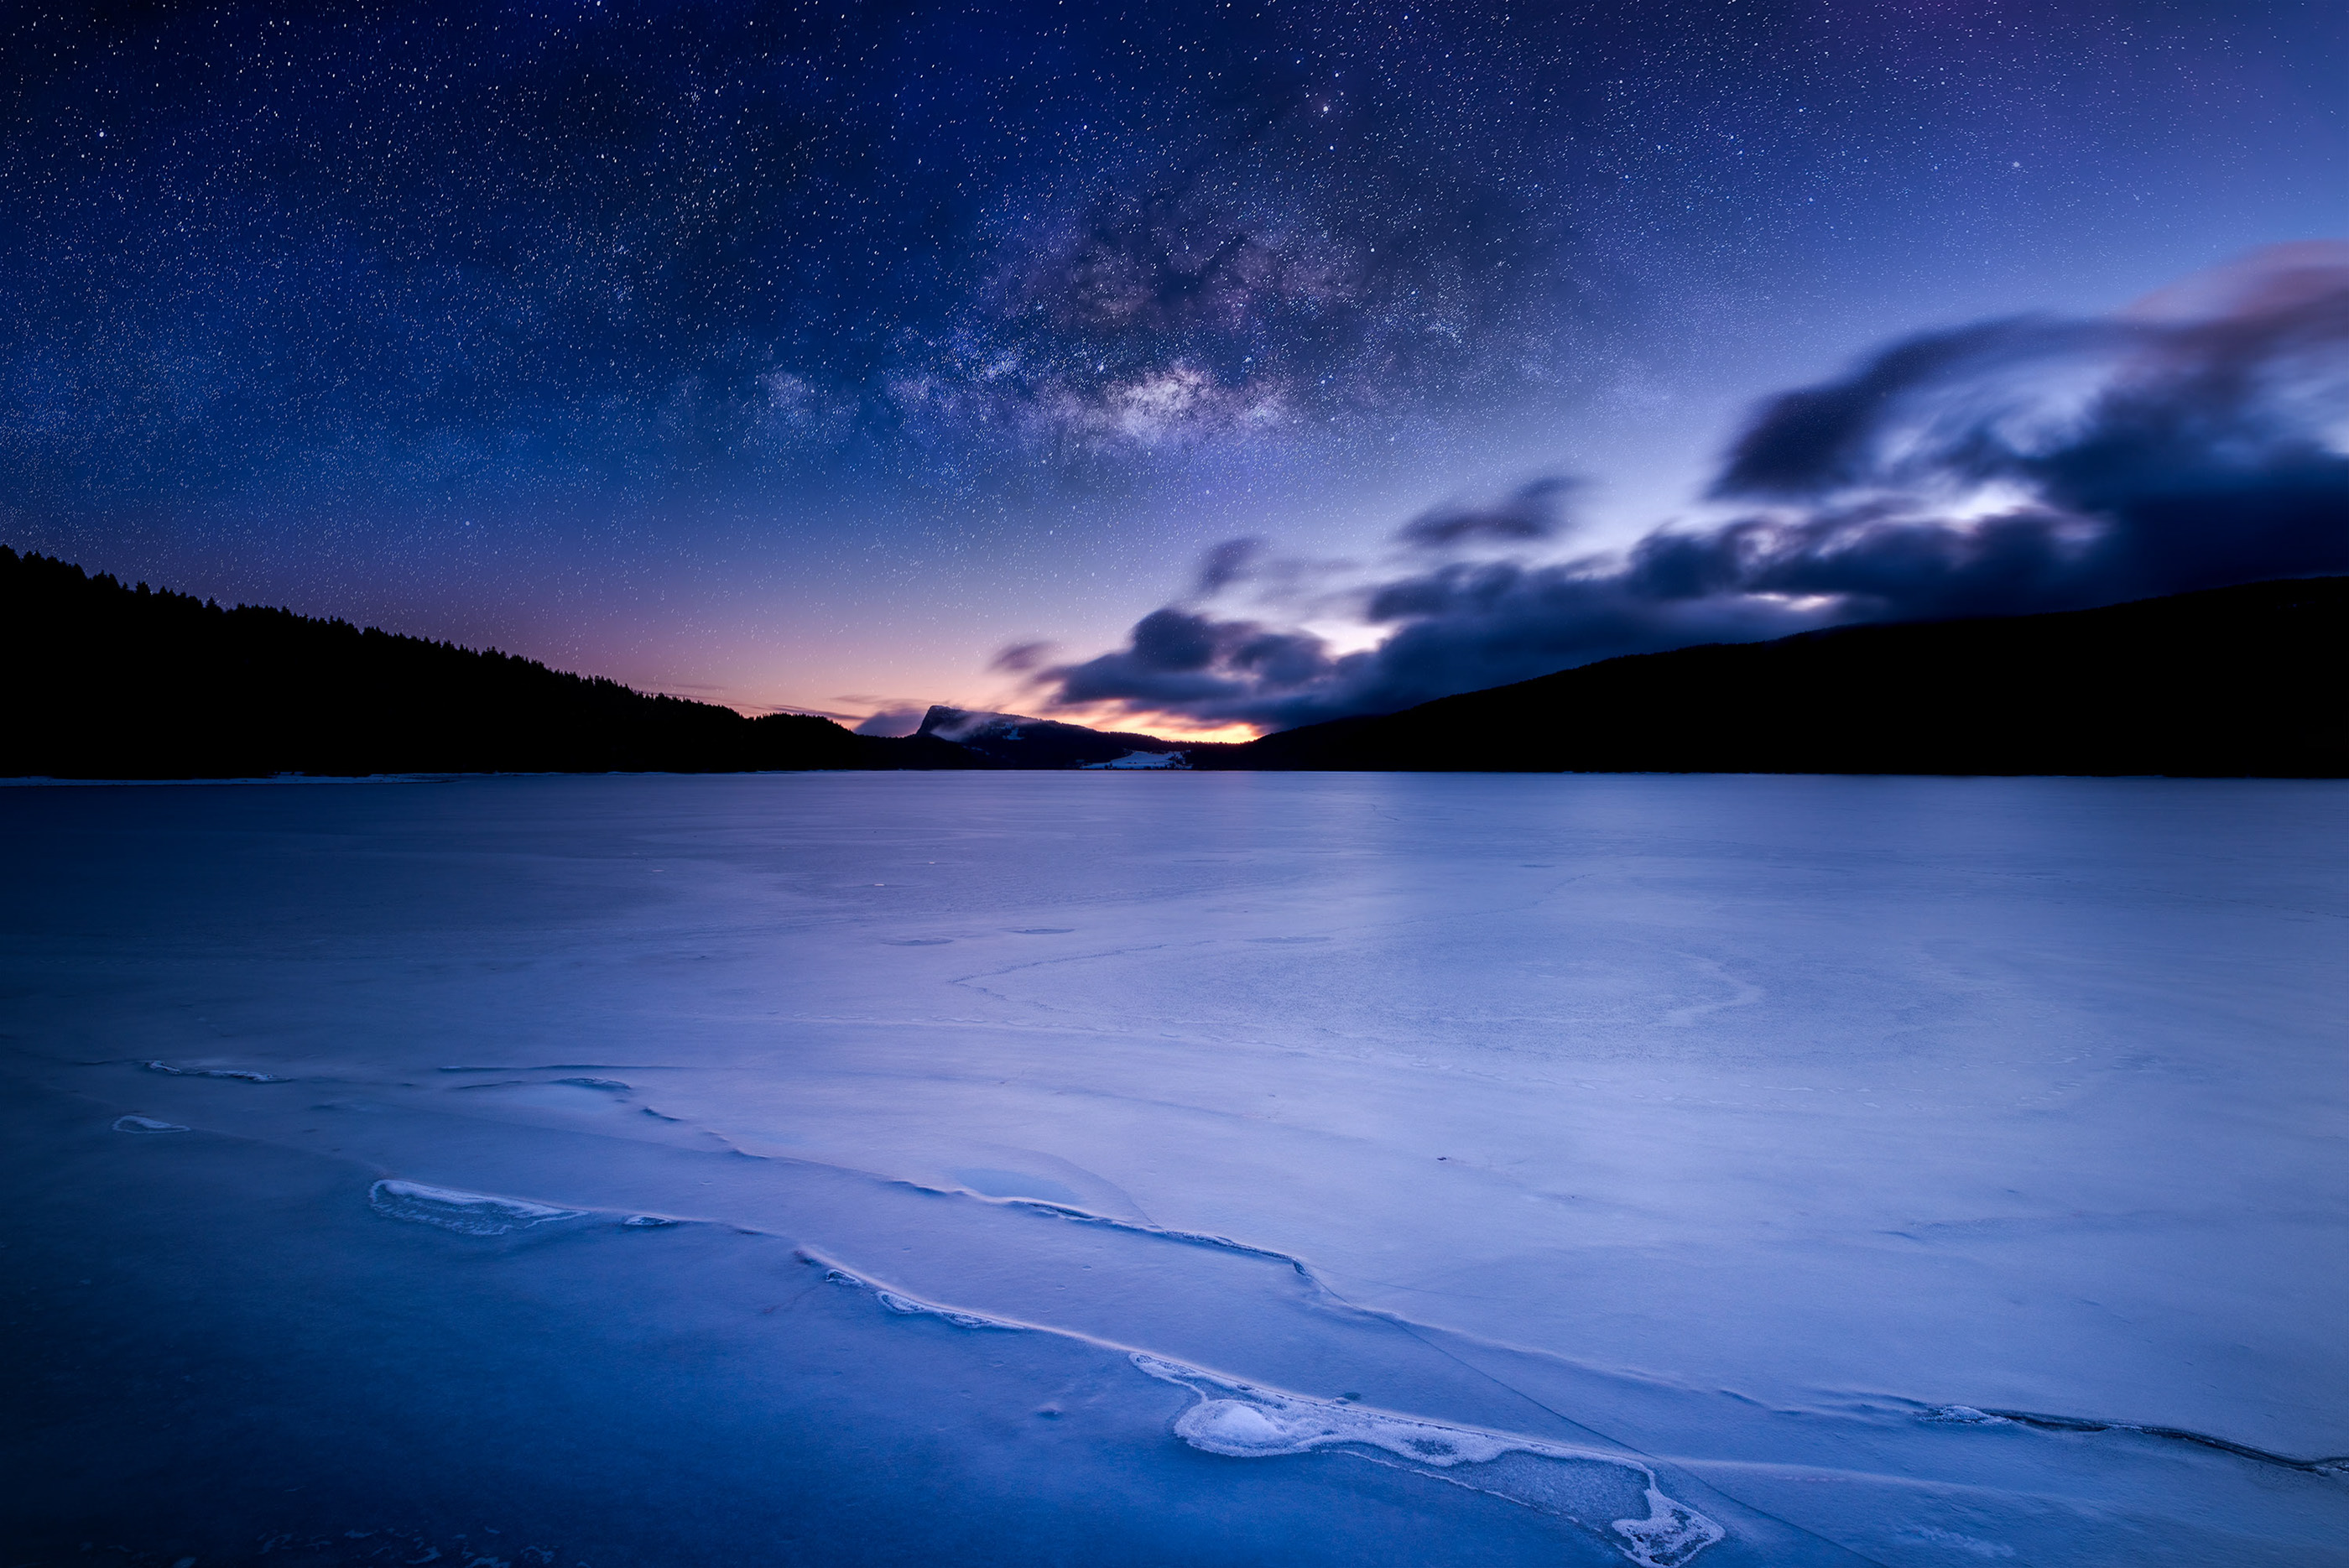 General 2800x1869 galaxy landscape nature photography sunrise Switzerland winter lake low light